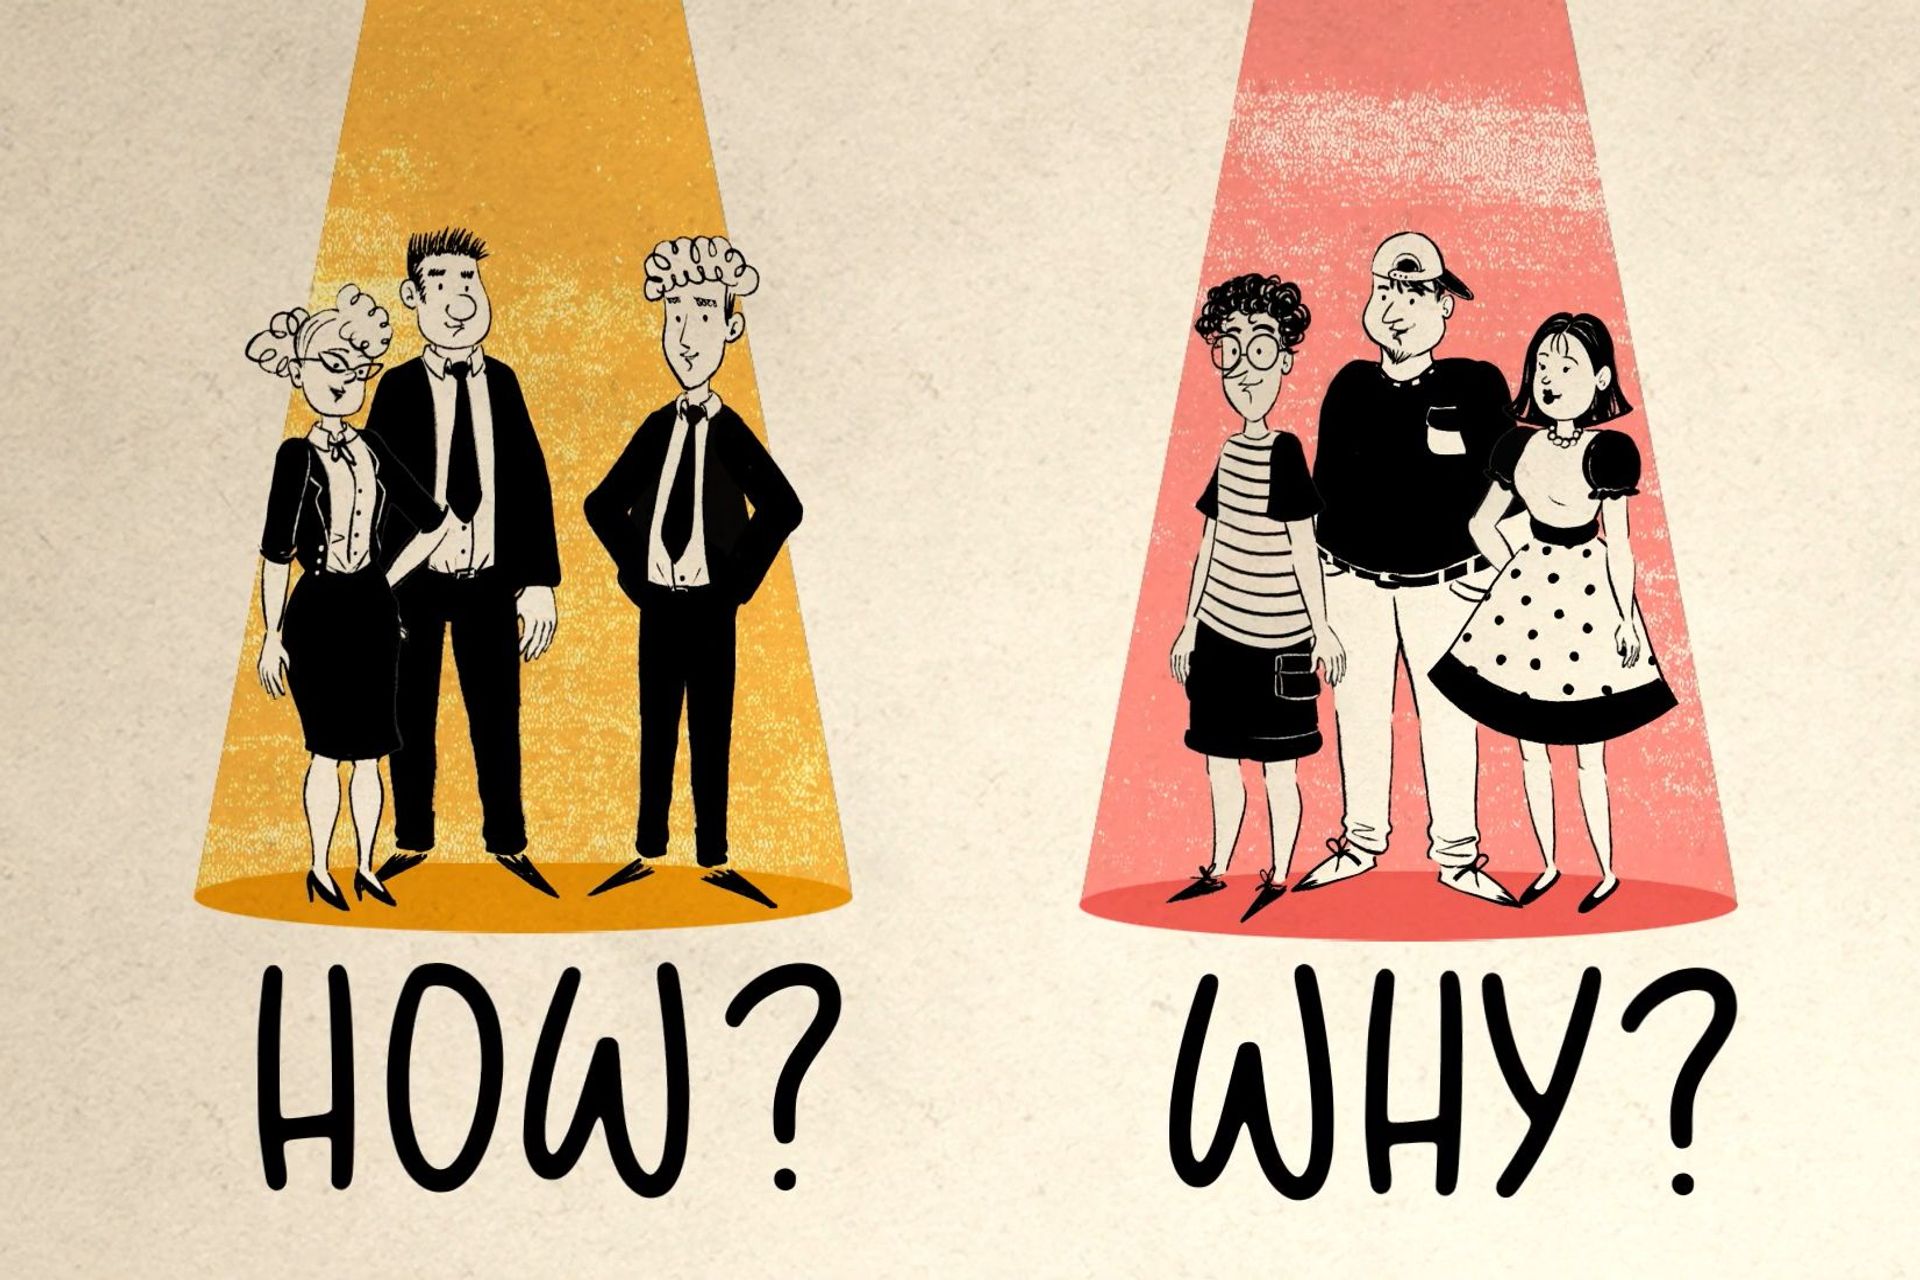 Il dilemma fra "Come" e "Perché" in lingua inglese in rapporto a due diverse tipologie di audience